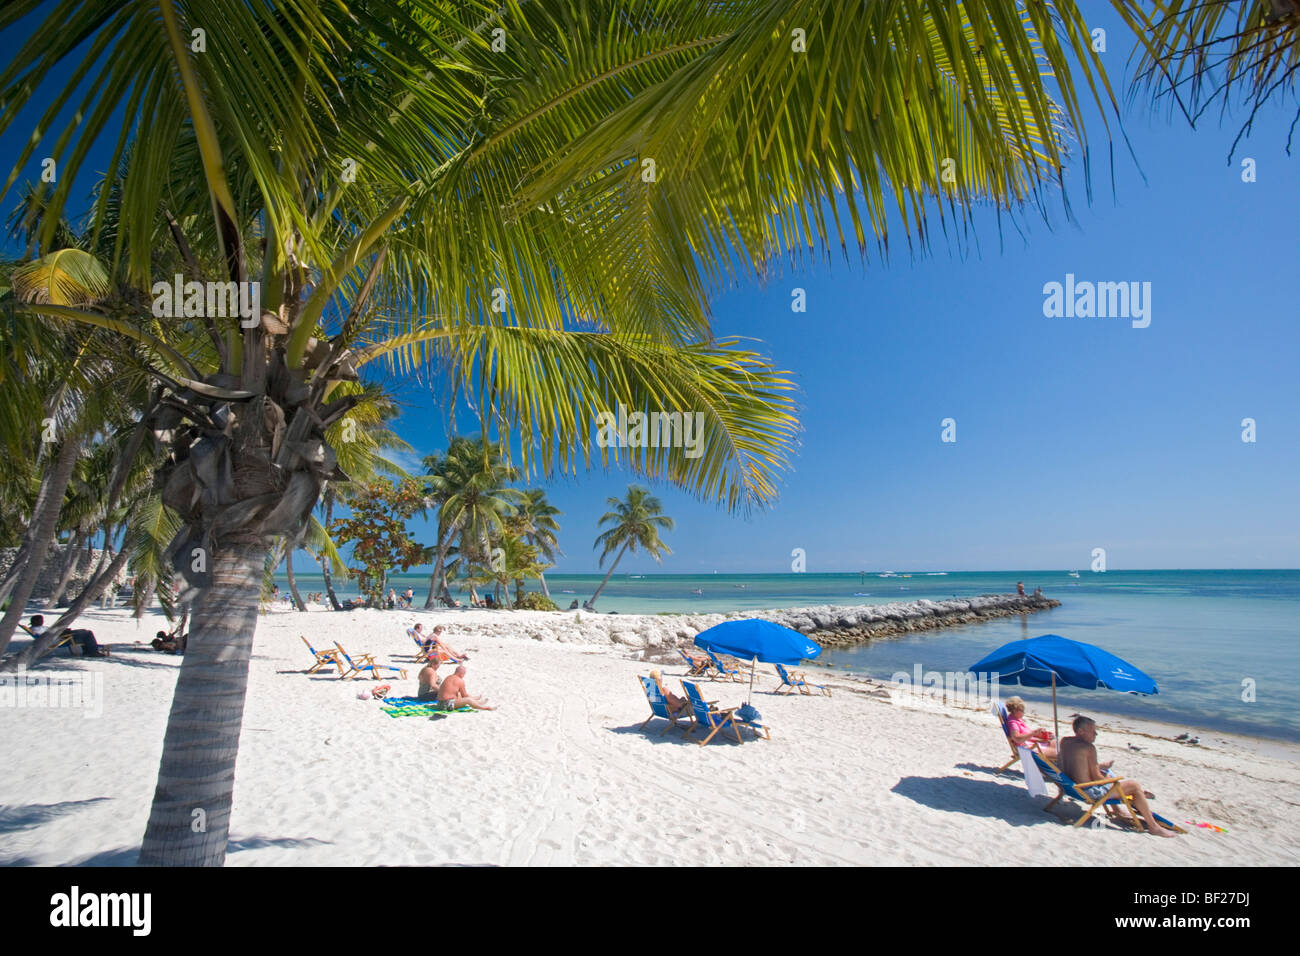 Di persone e a Palm Beach sotto il cielo blu, Smathers Beach, Key West, Florida Keys, Florida, Stati Uniti d'America Foto Stock